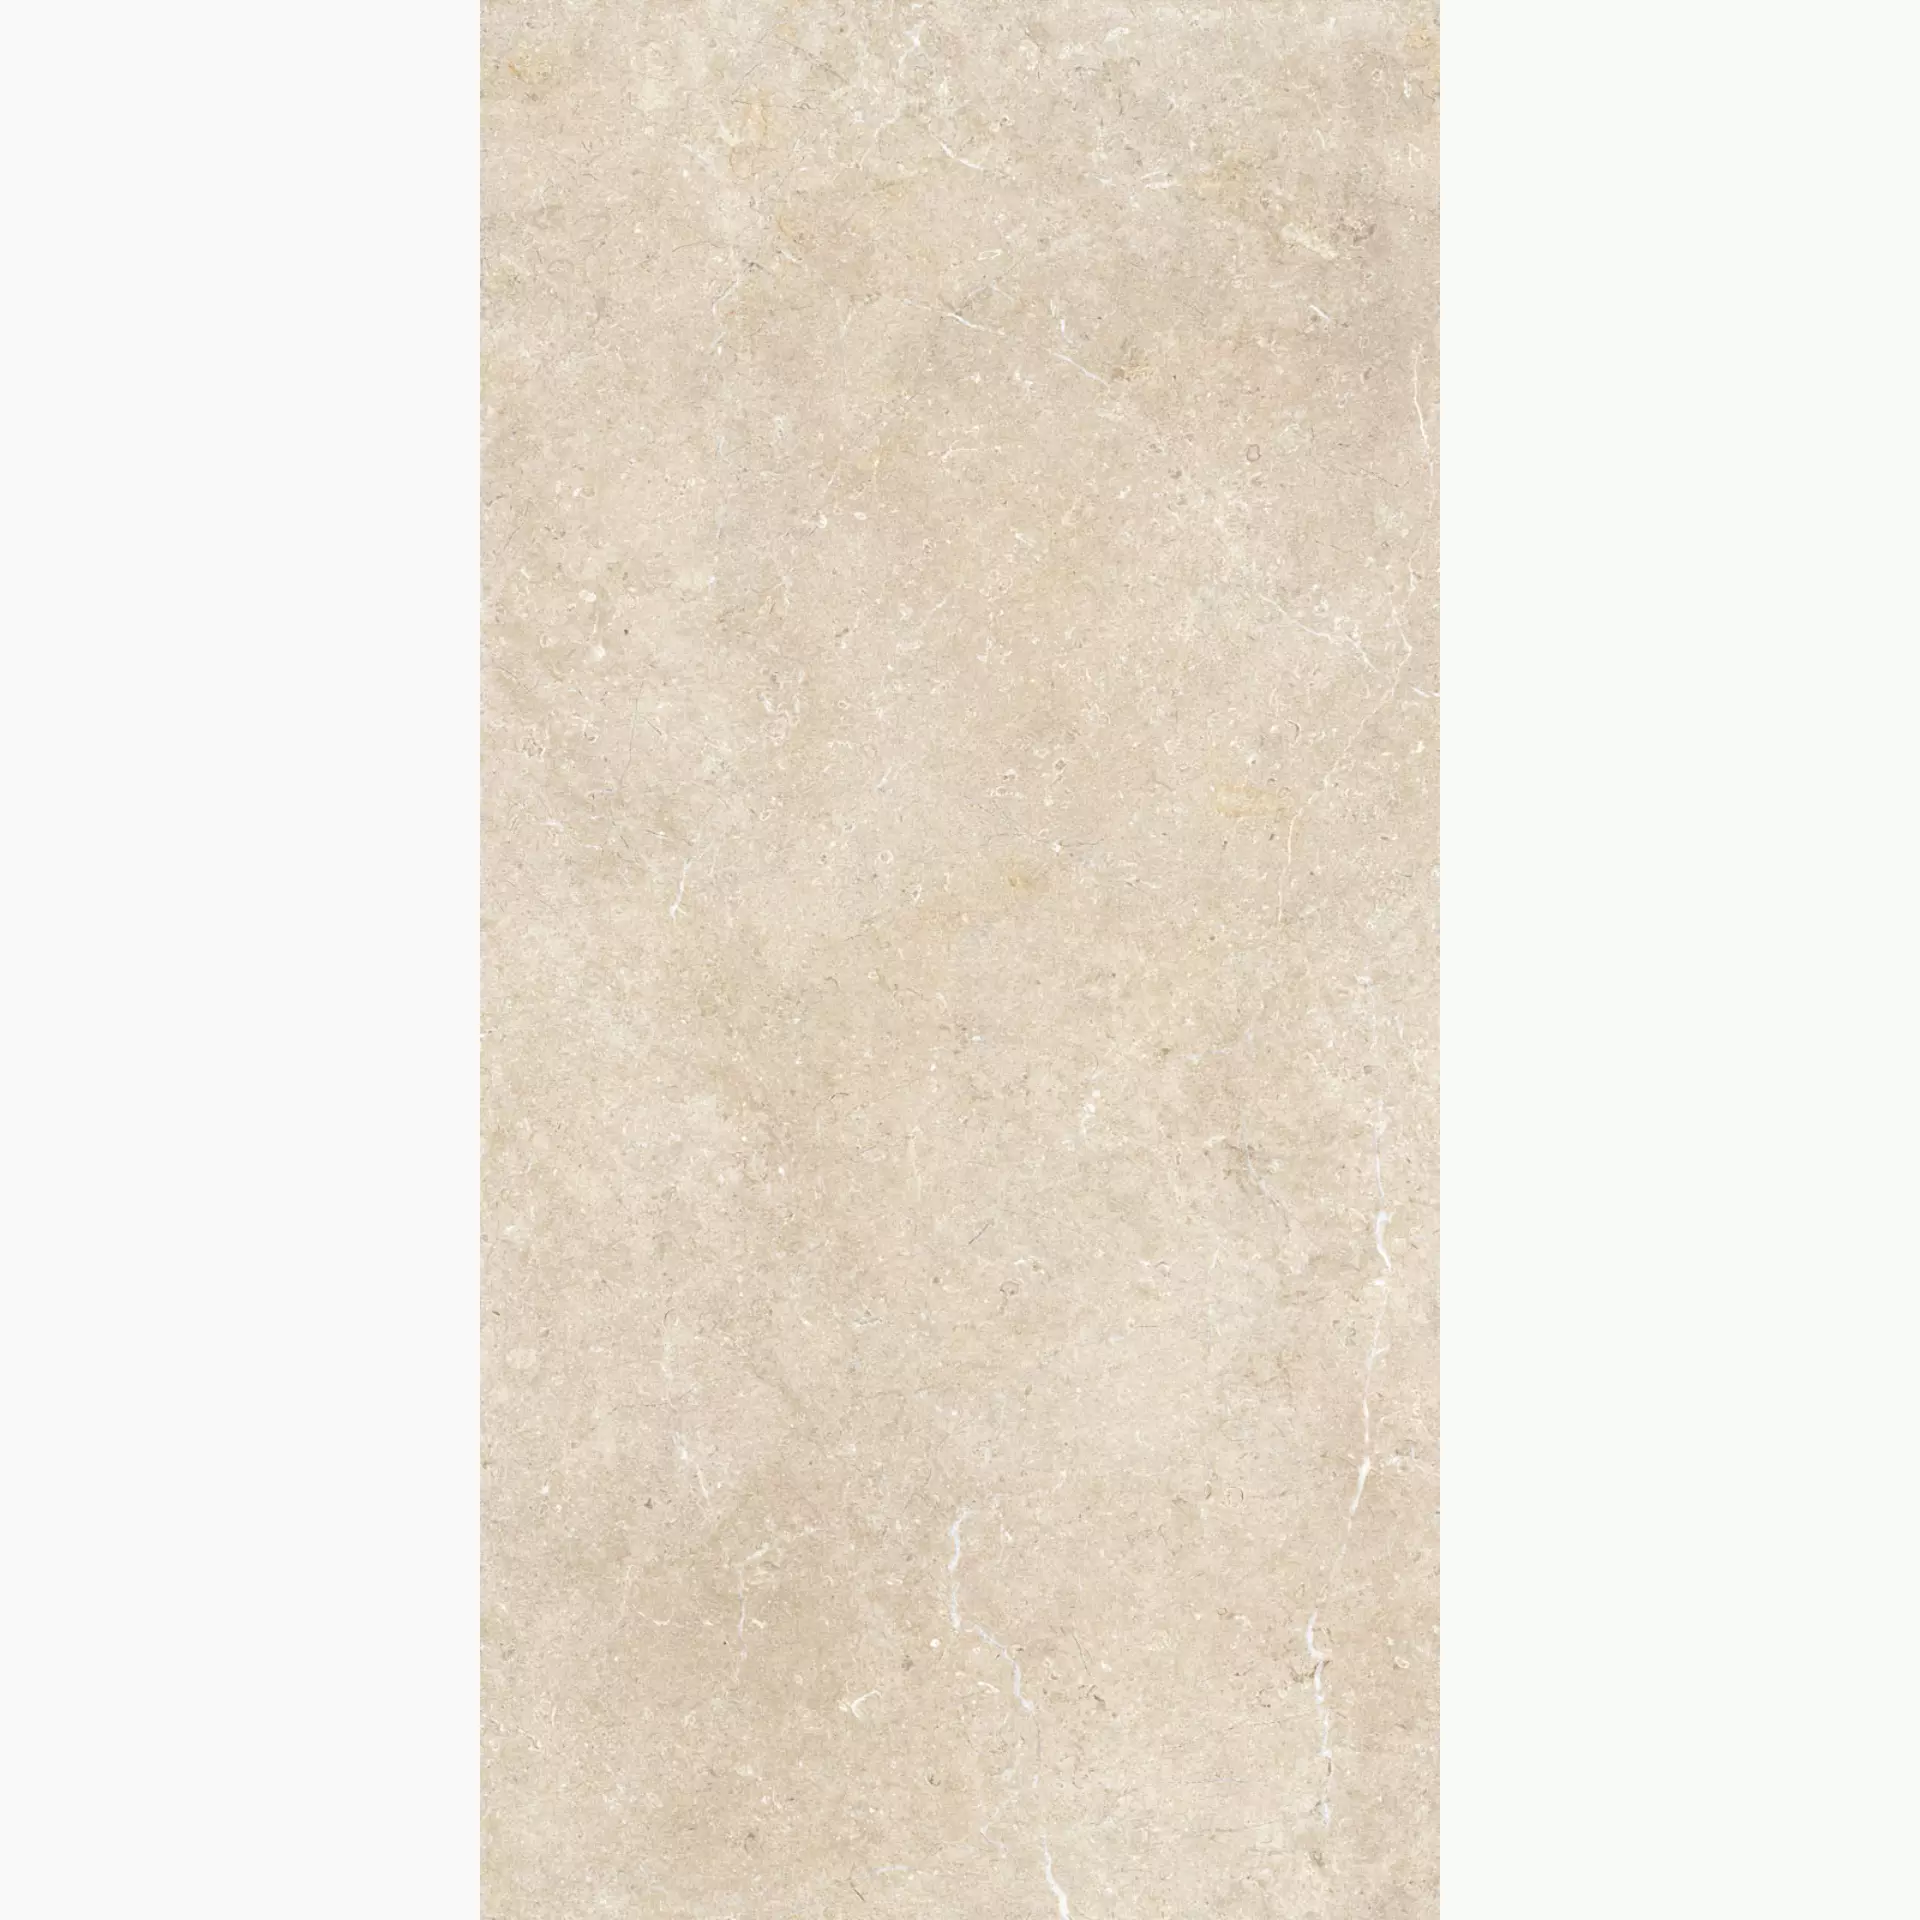 Marazzi Mystone Limestone Sand Naturale – Matt M7E2 75x150cm rectified 9,5mm